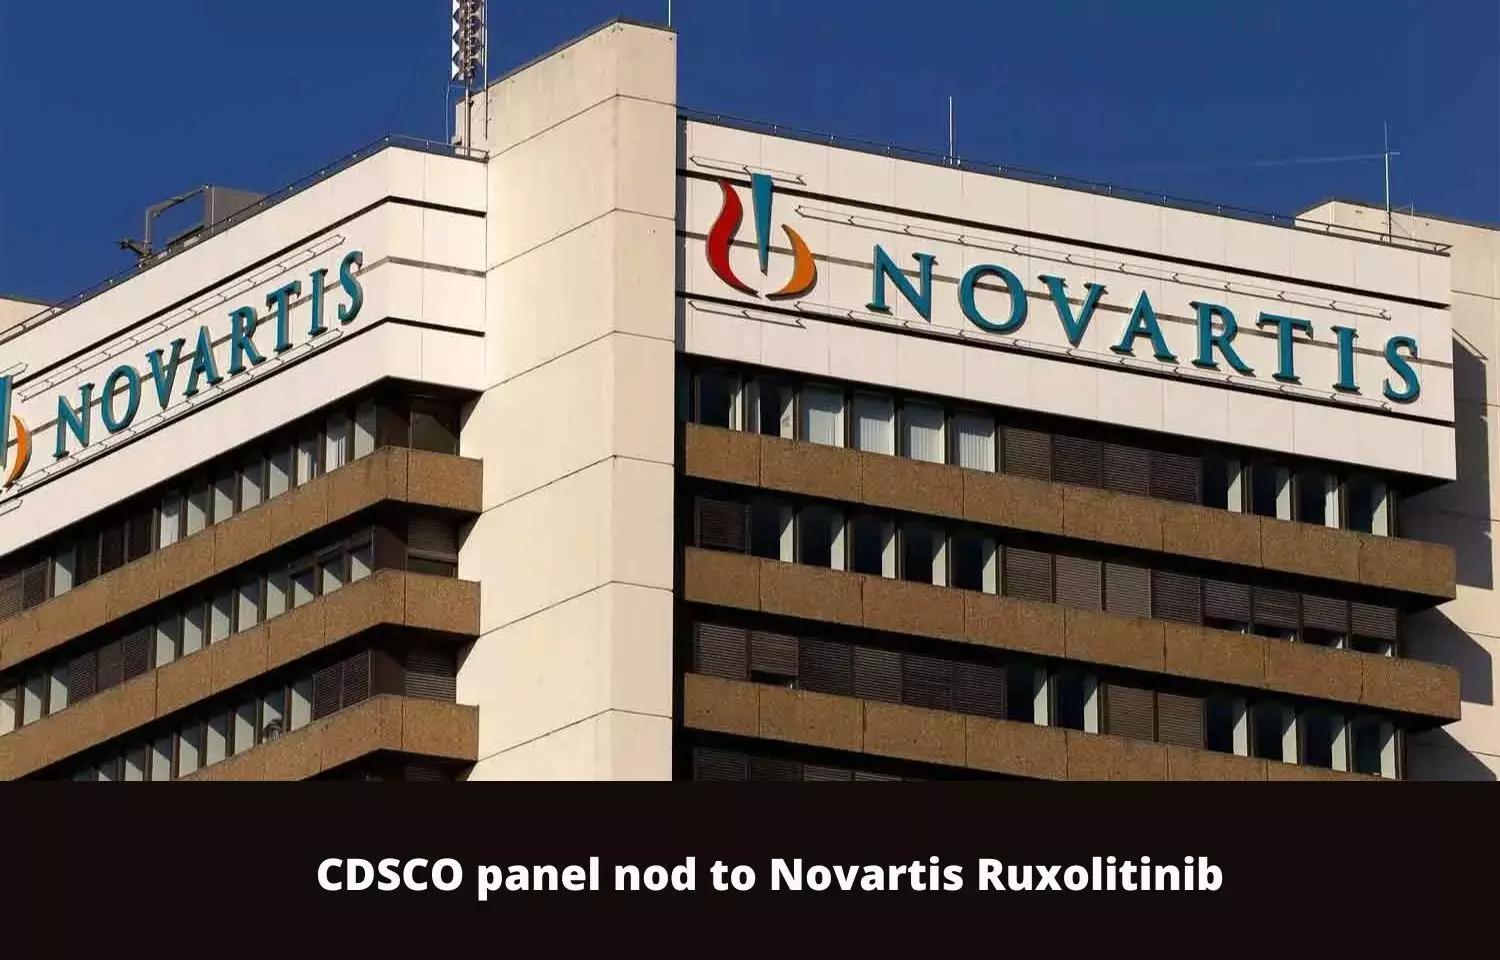 CDSCO panel nod to Novartis Ruxolitinib for acute and chronic graft versus host disease